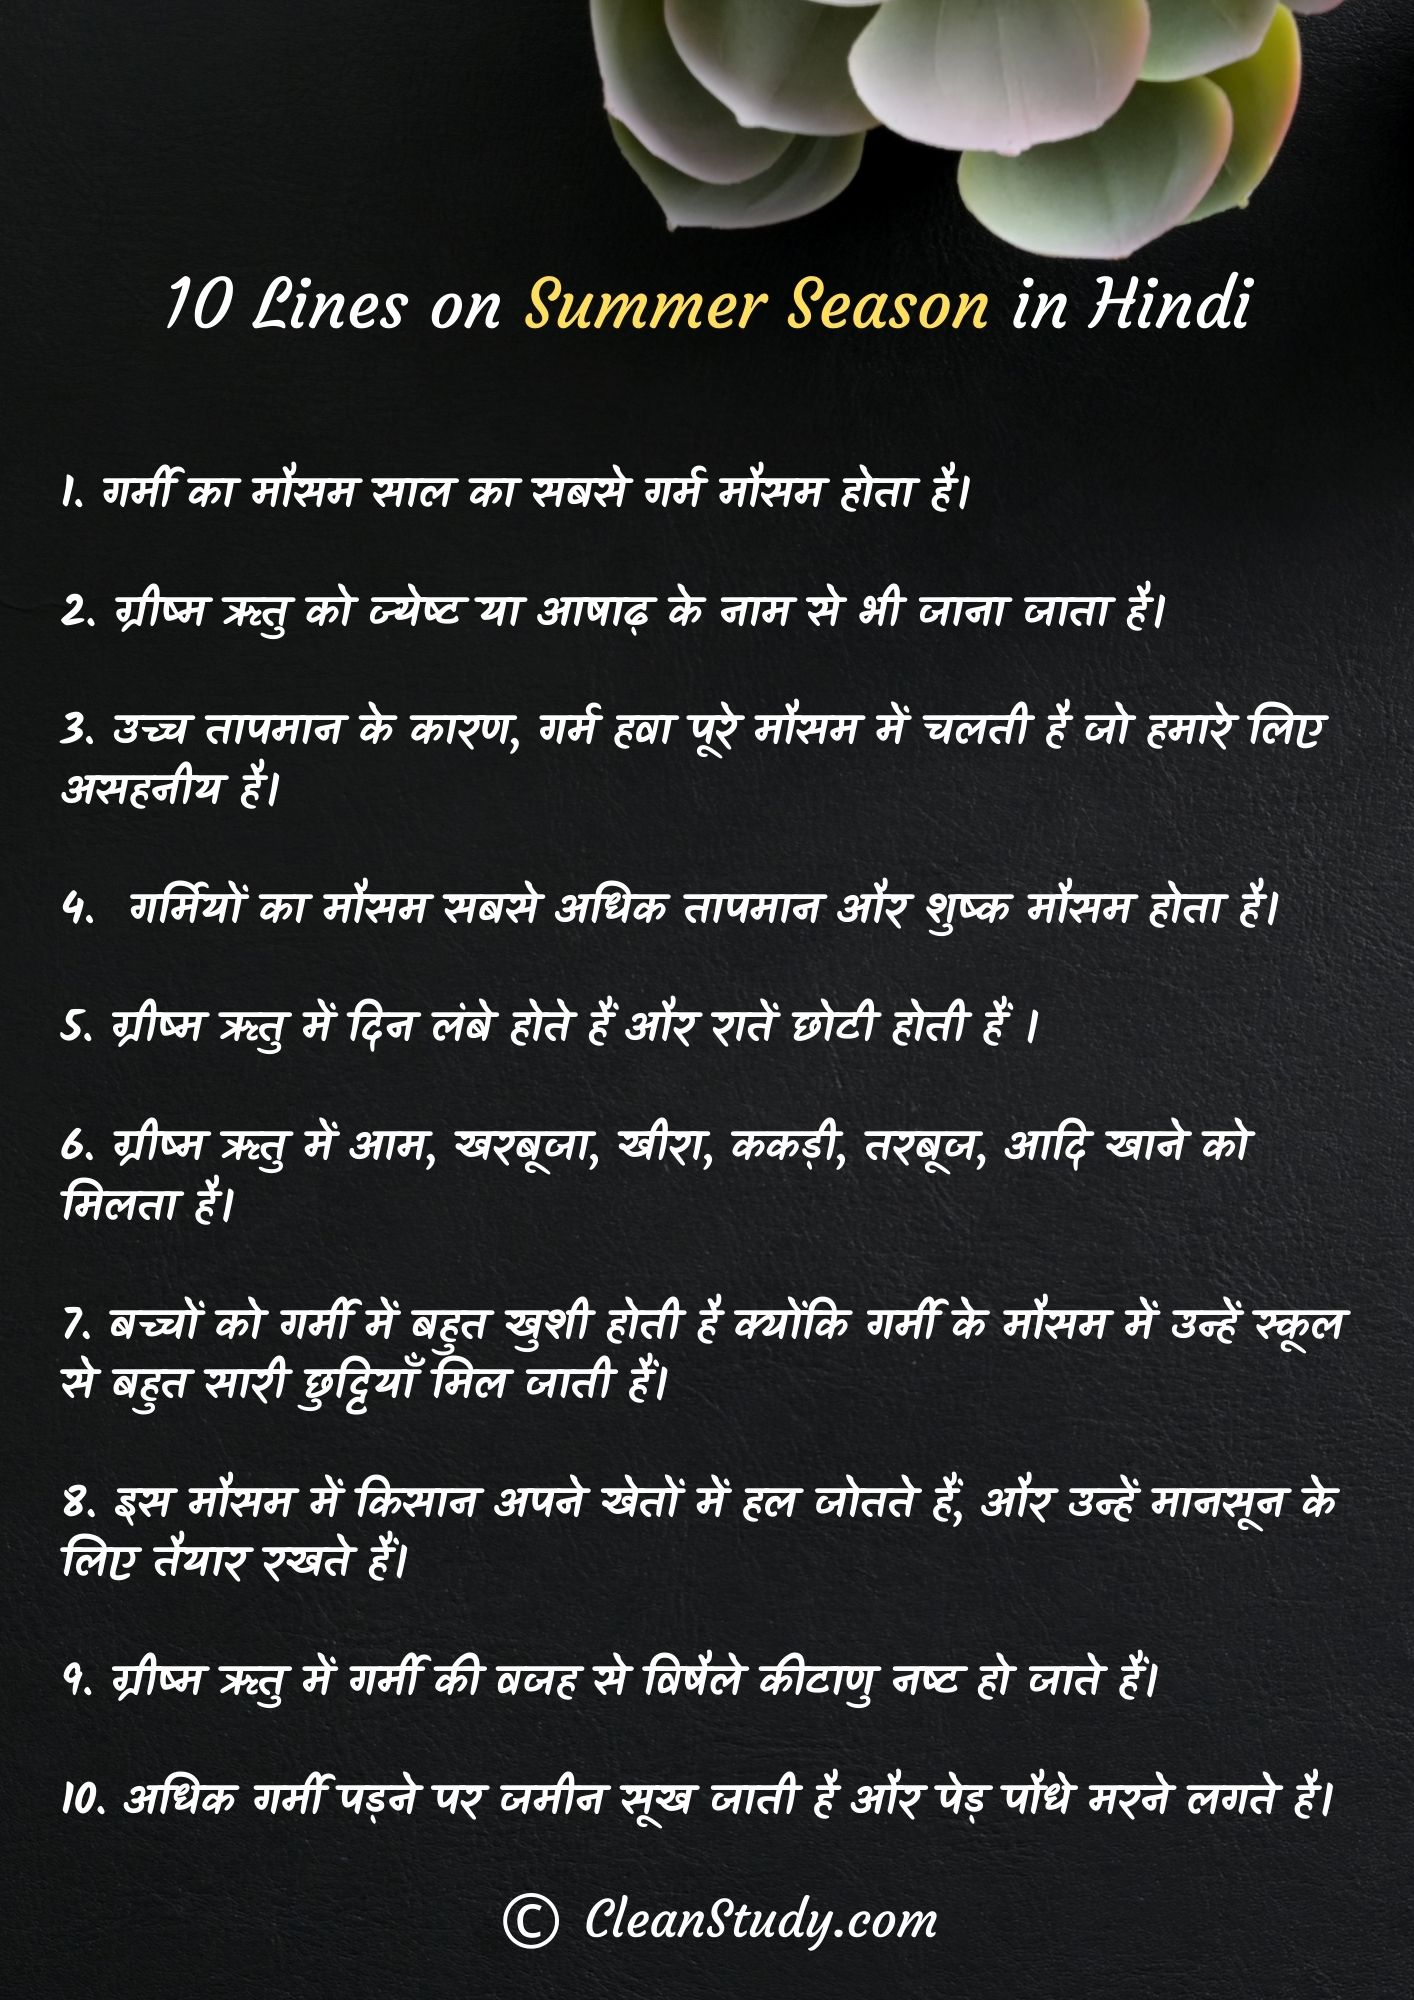 10 Lines on Summer Season in Hindi